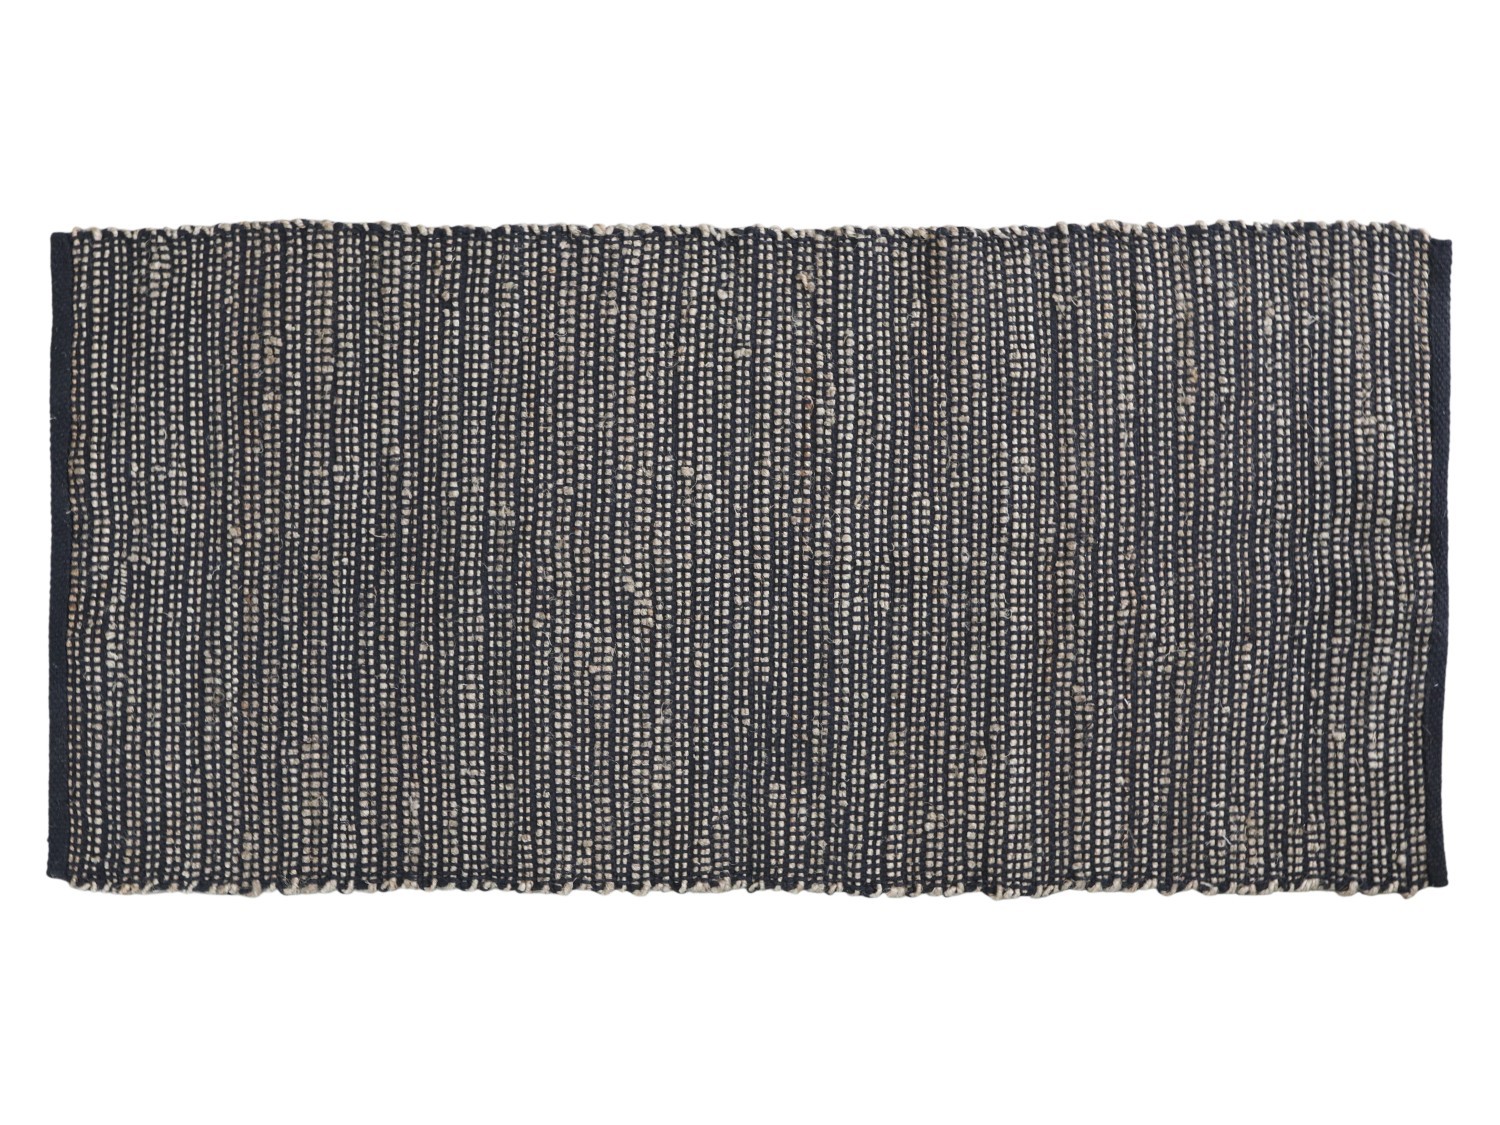 Černý antik bavlněný koberec Rug black - 75*160 cm Chic Antique